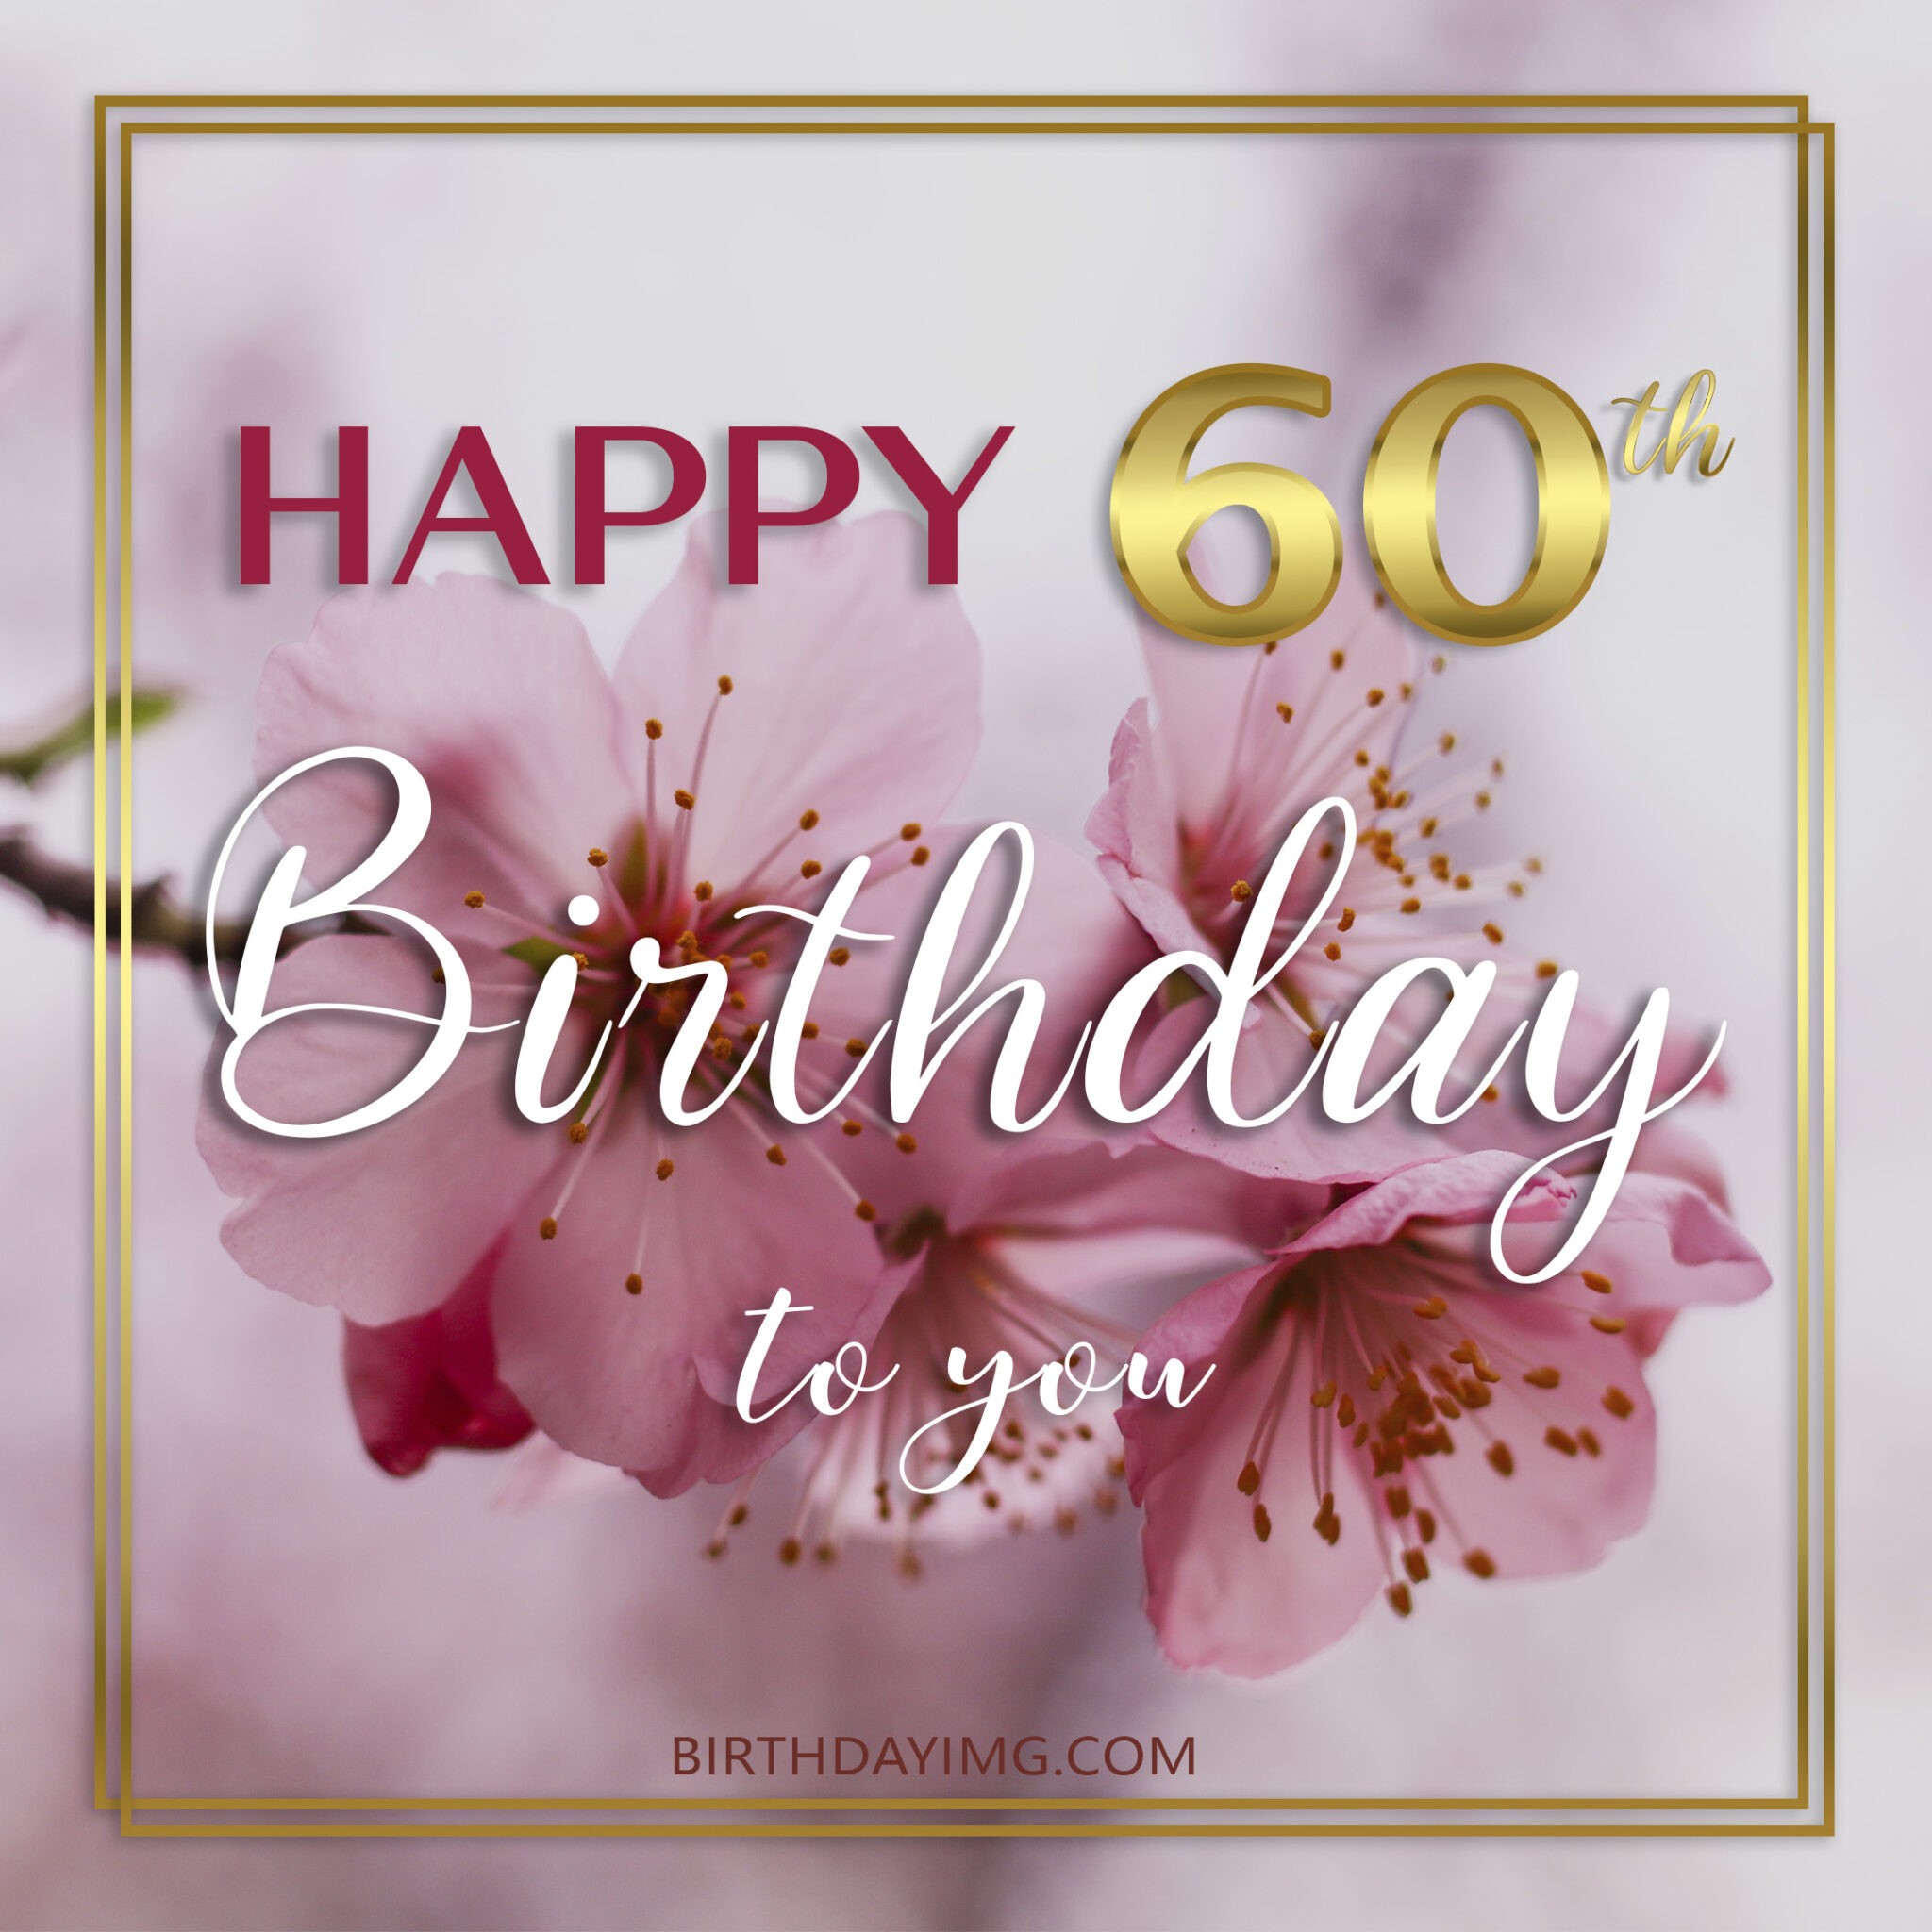 free-60th-years-happy-birthday-image-with-pink-flowers-birthdayimg